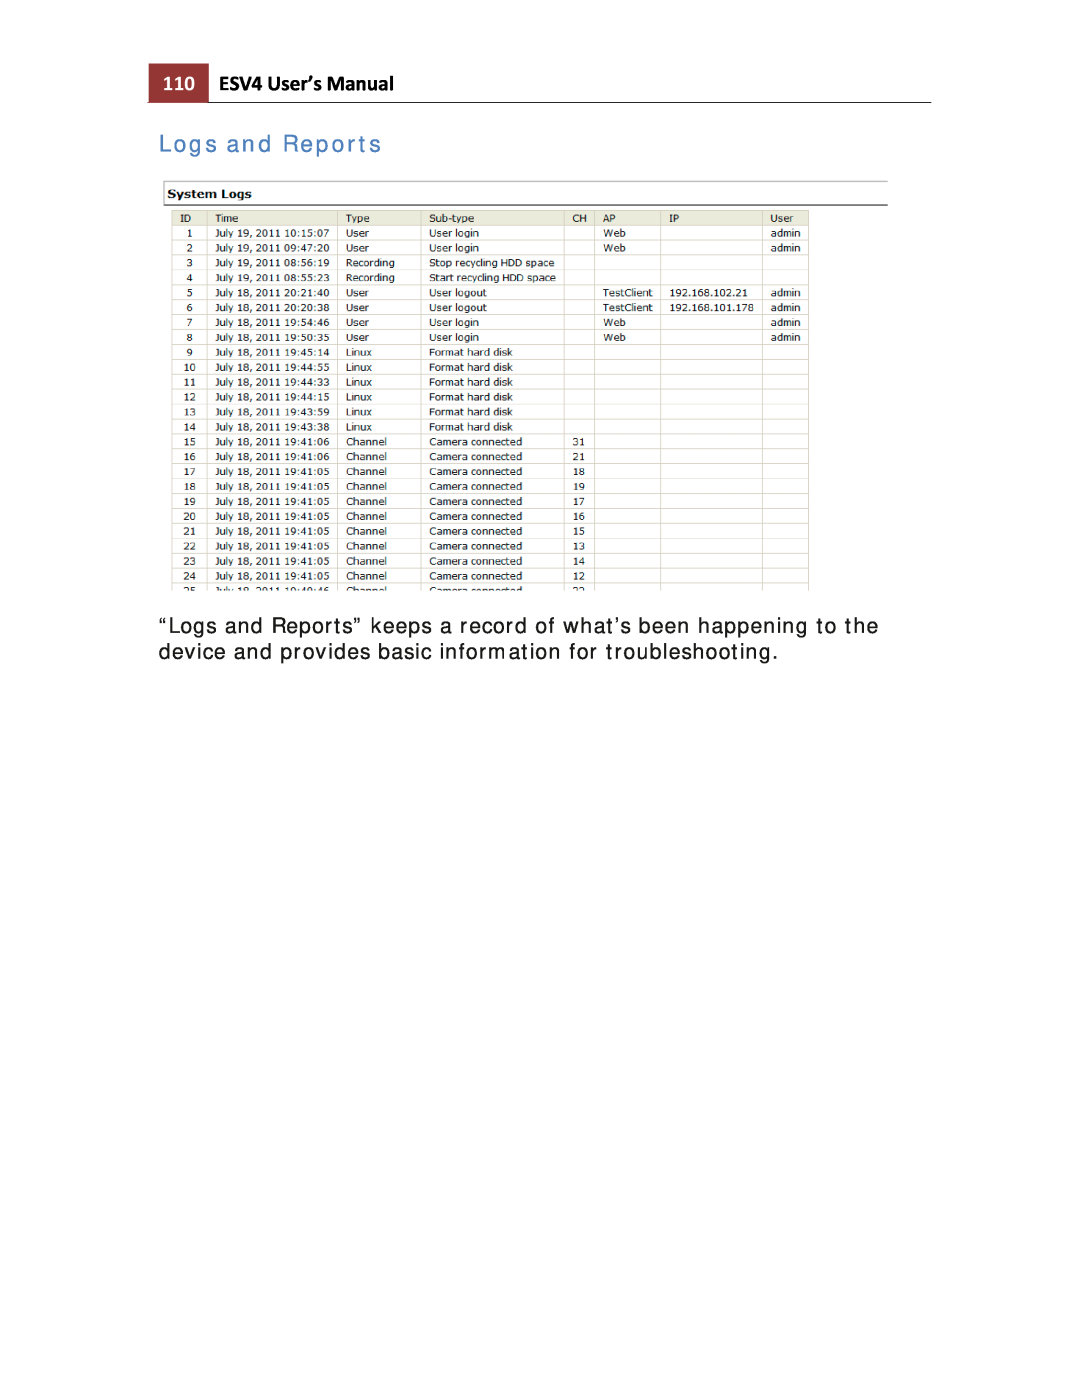 Toshiba ESV41T user manual Logs and Reports, 110ESV4 User’s Manual 